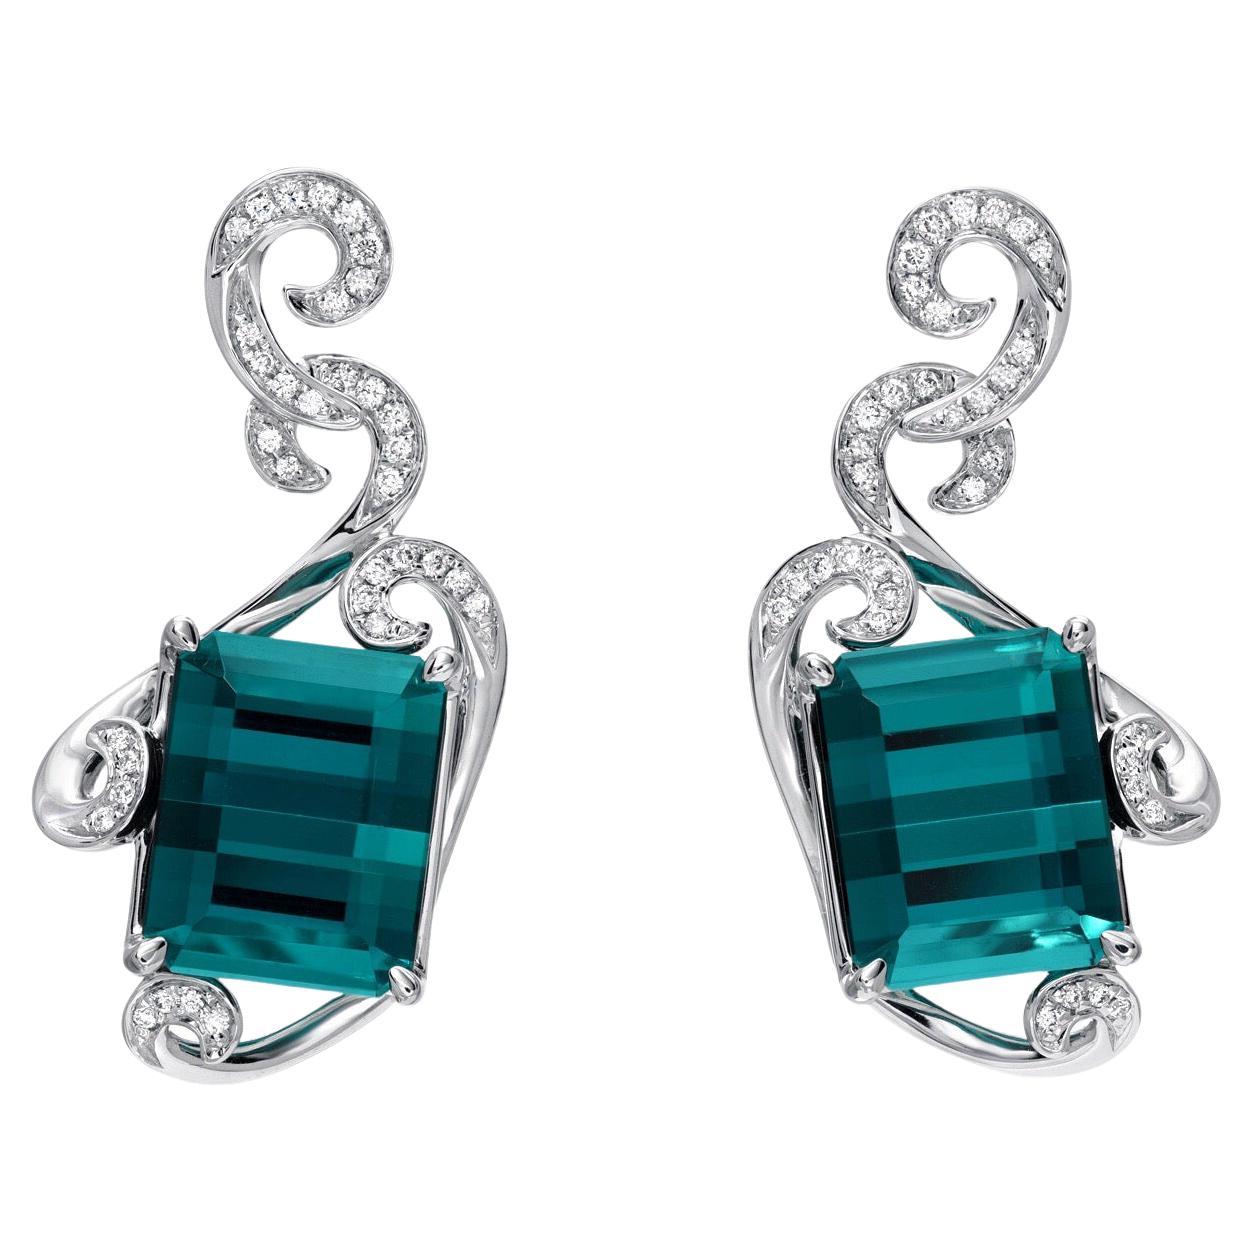 Indicolite Tourmaline Earrings 12.98 Carat Emerald Cut